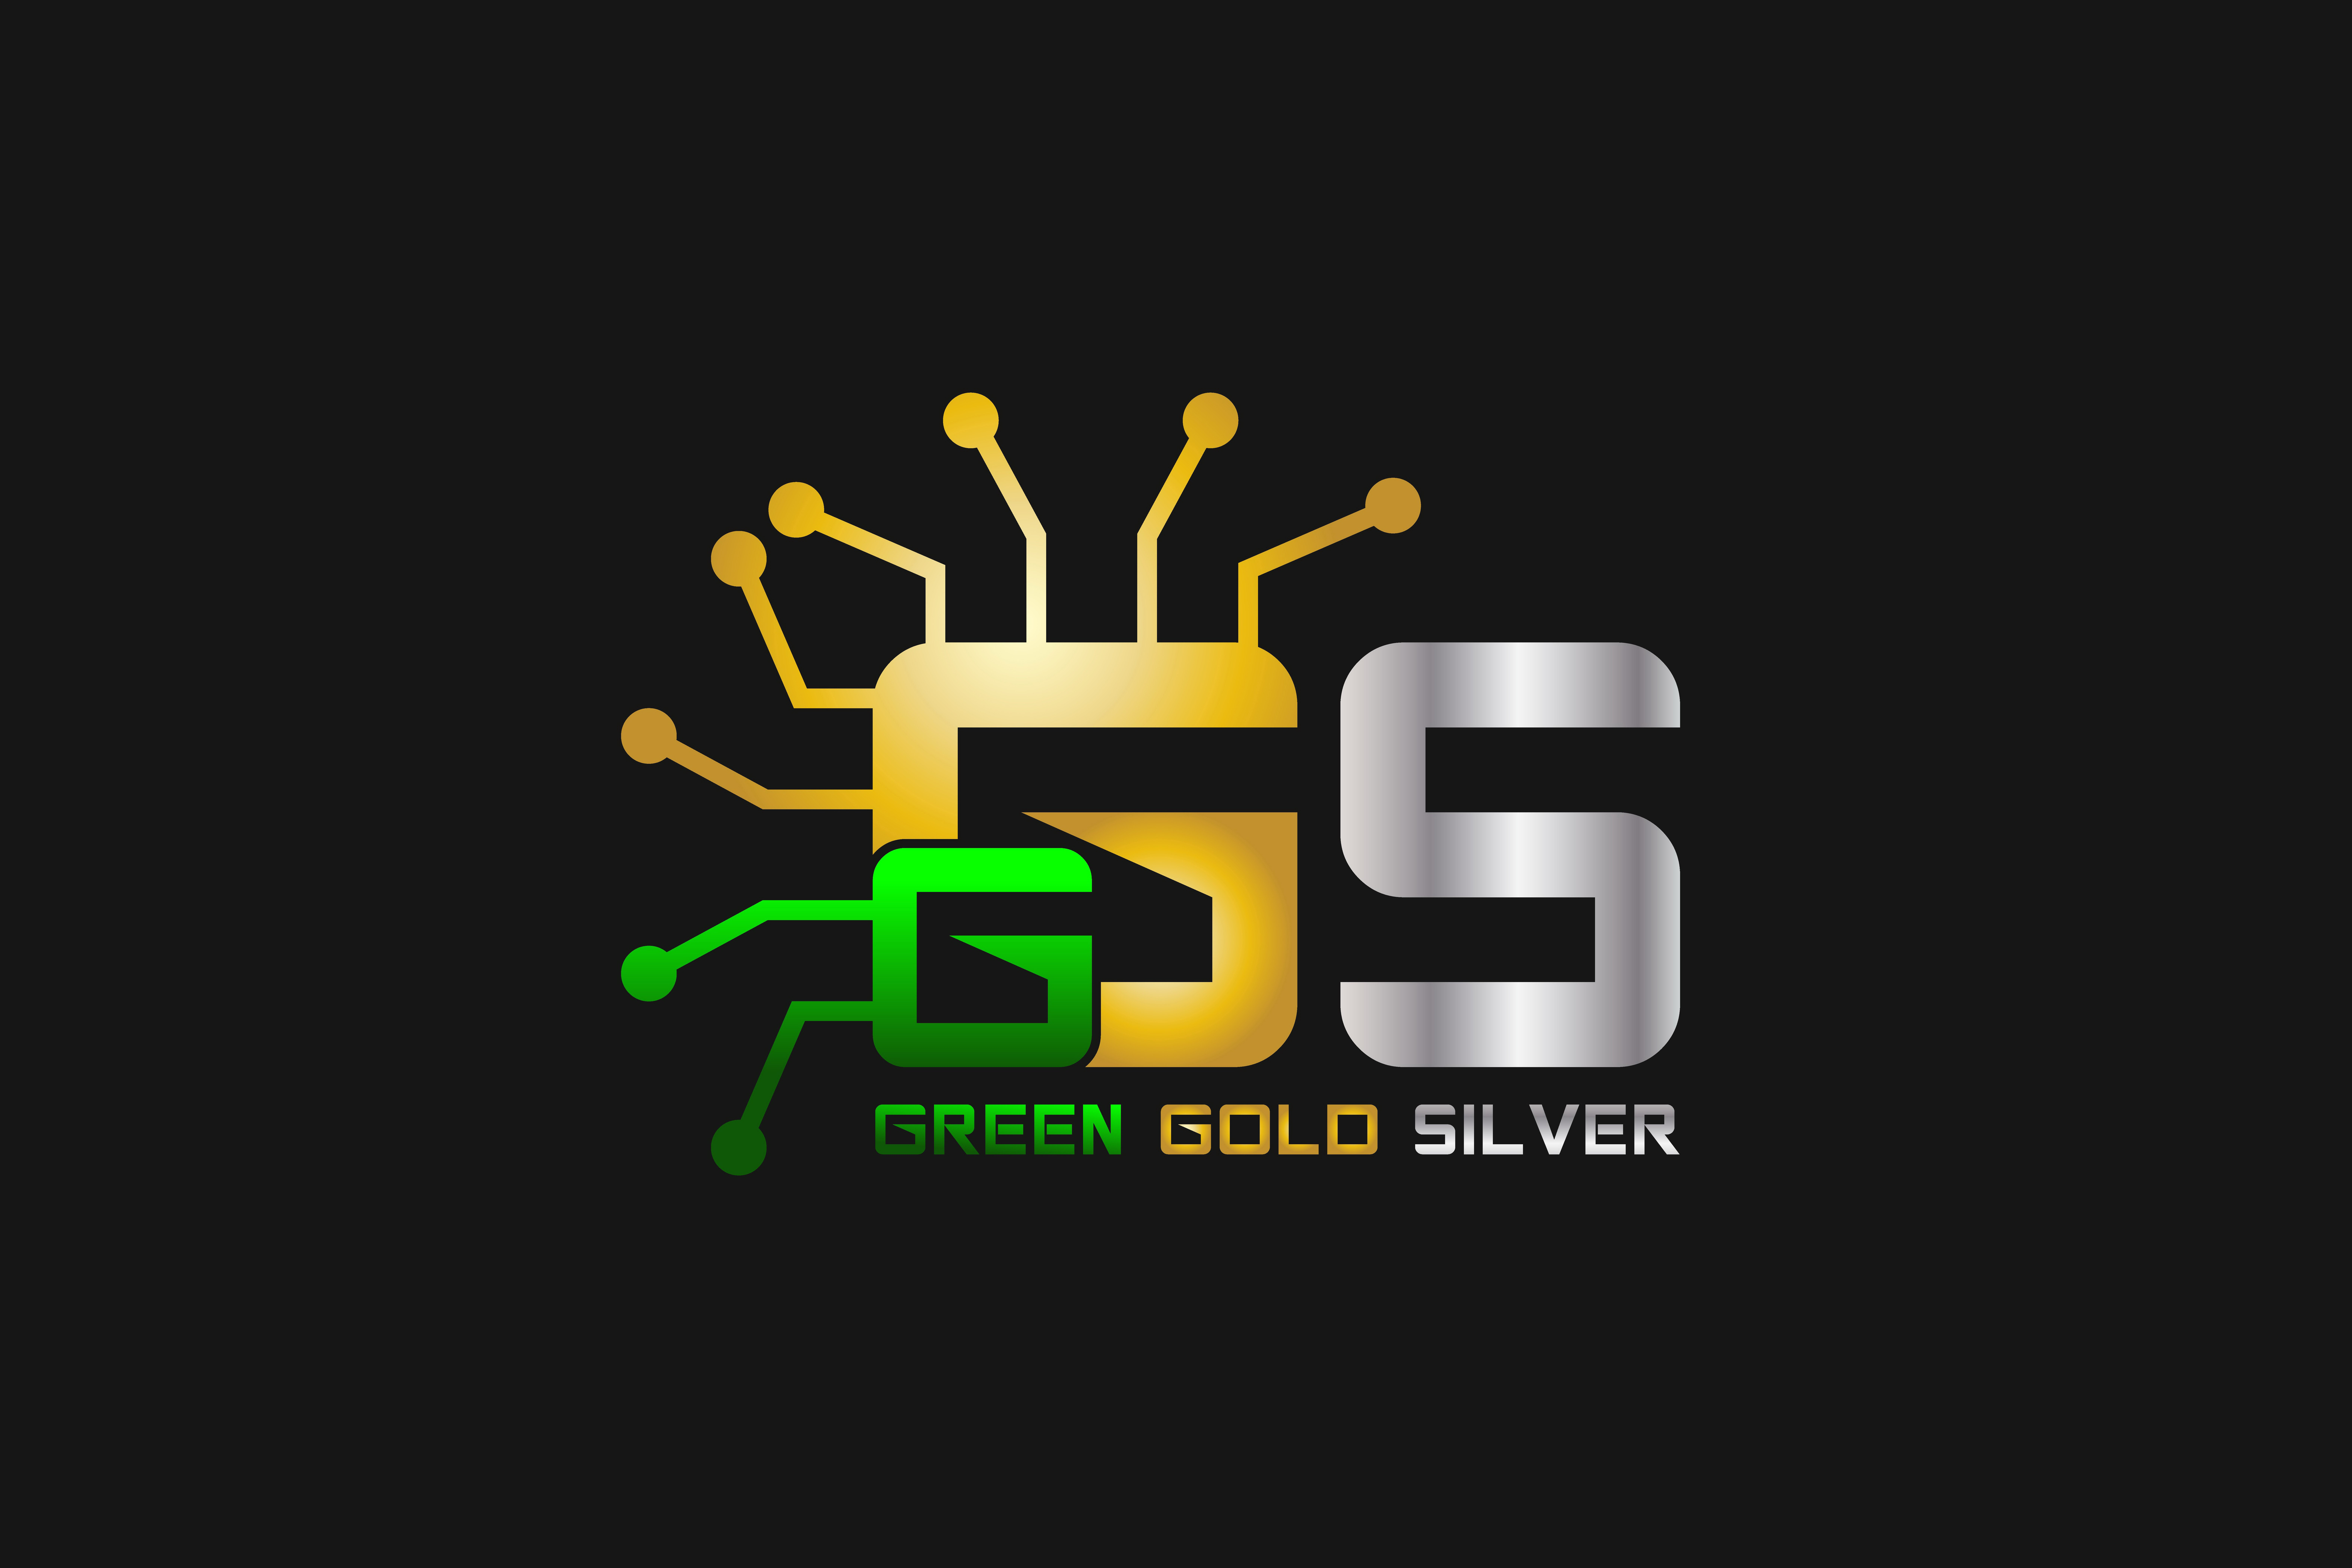 GGS GREEN GOLD SILVER